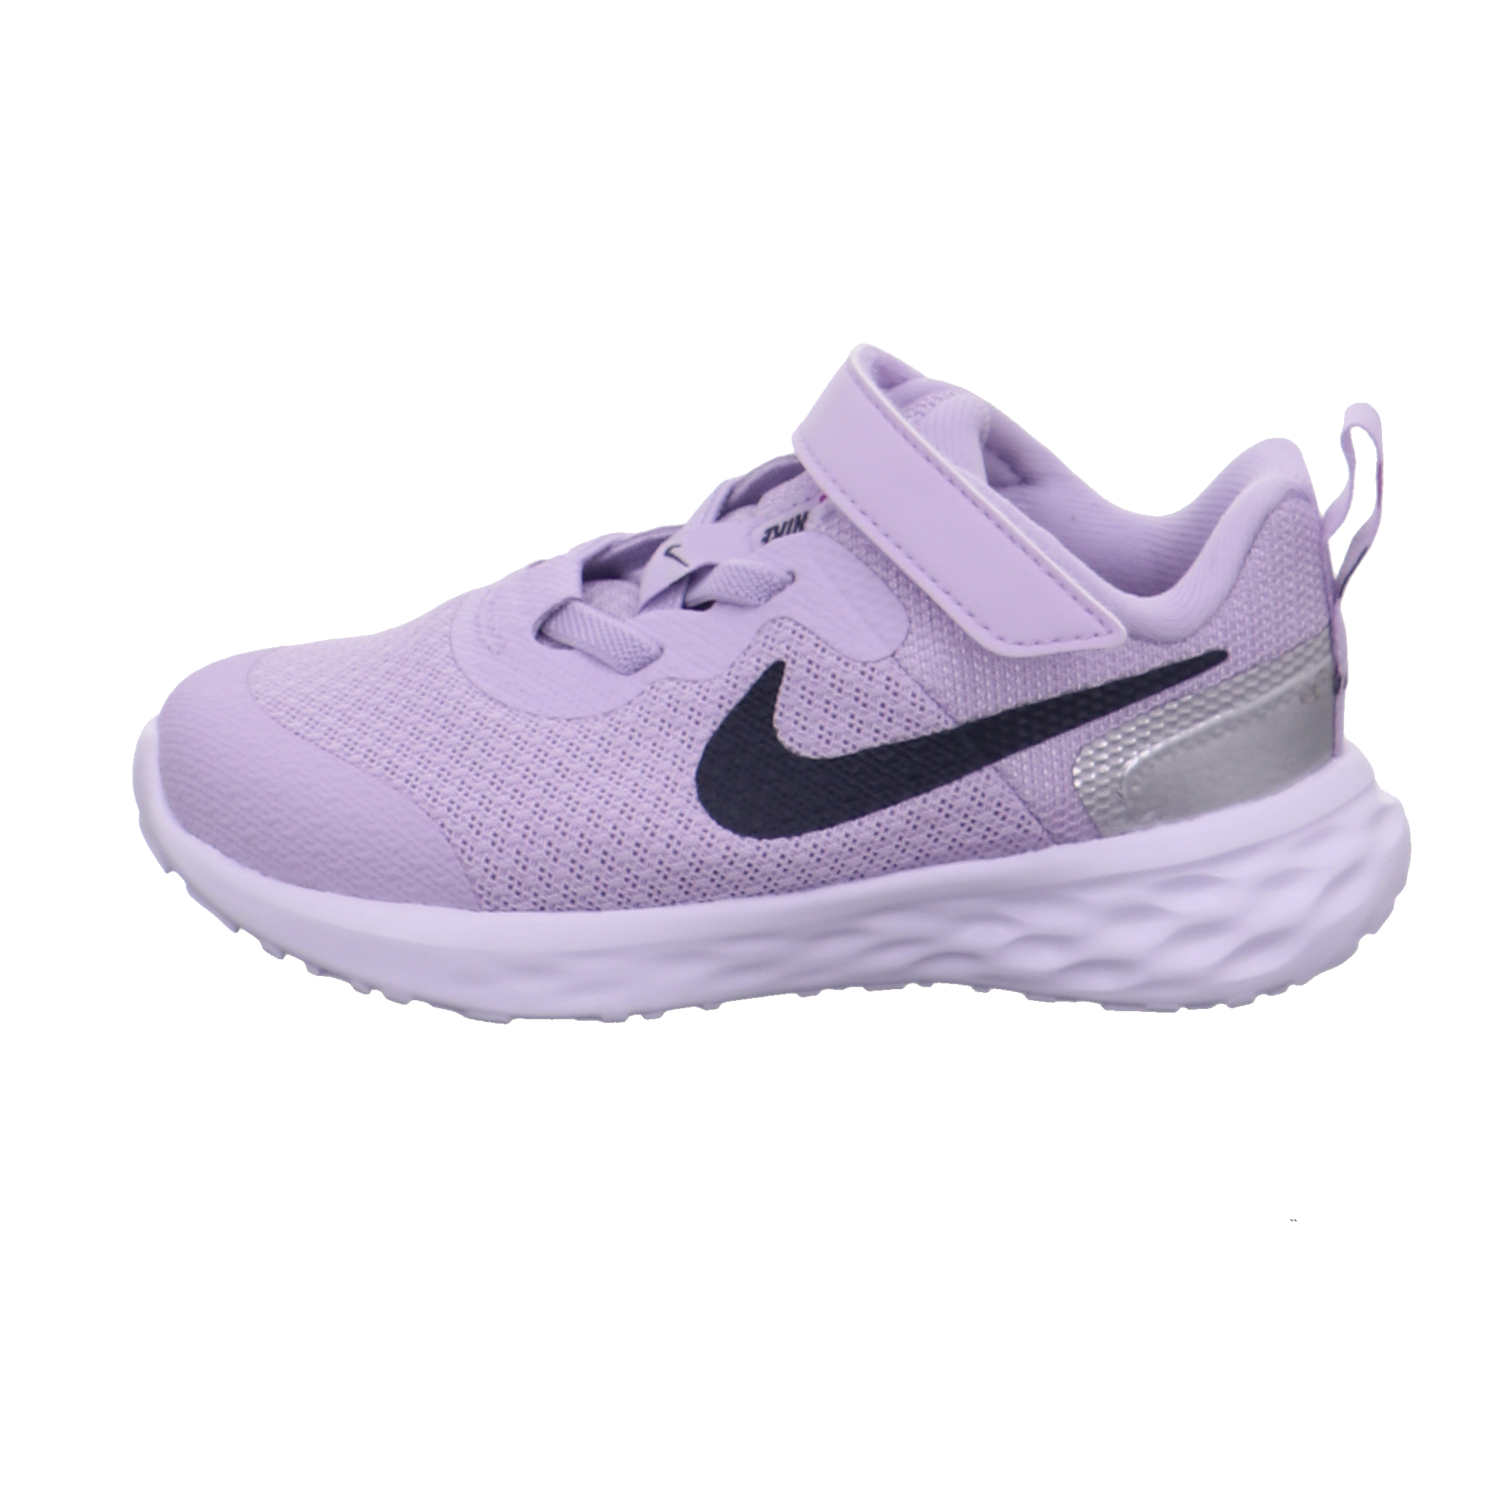 Nike Halbschuhe viola lila Bild1